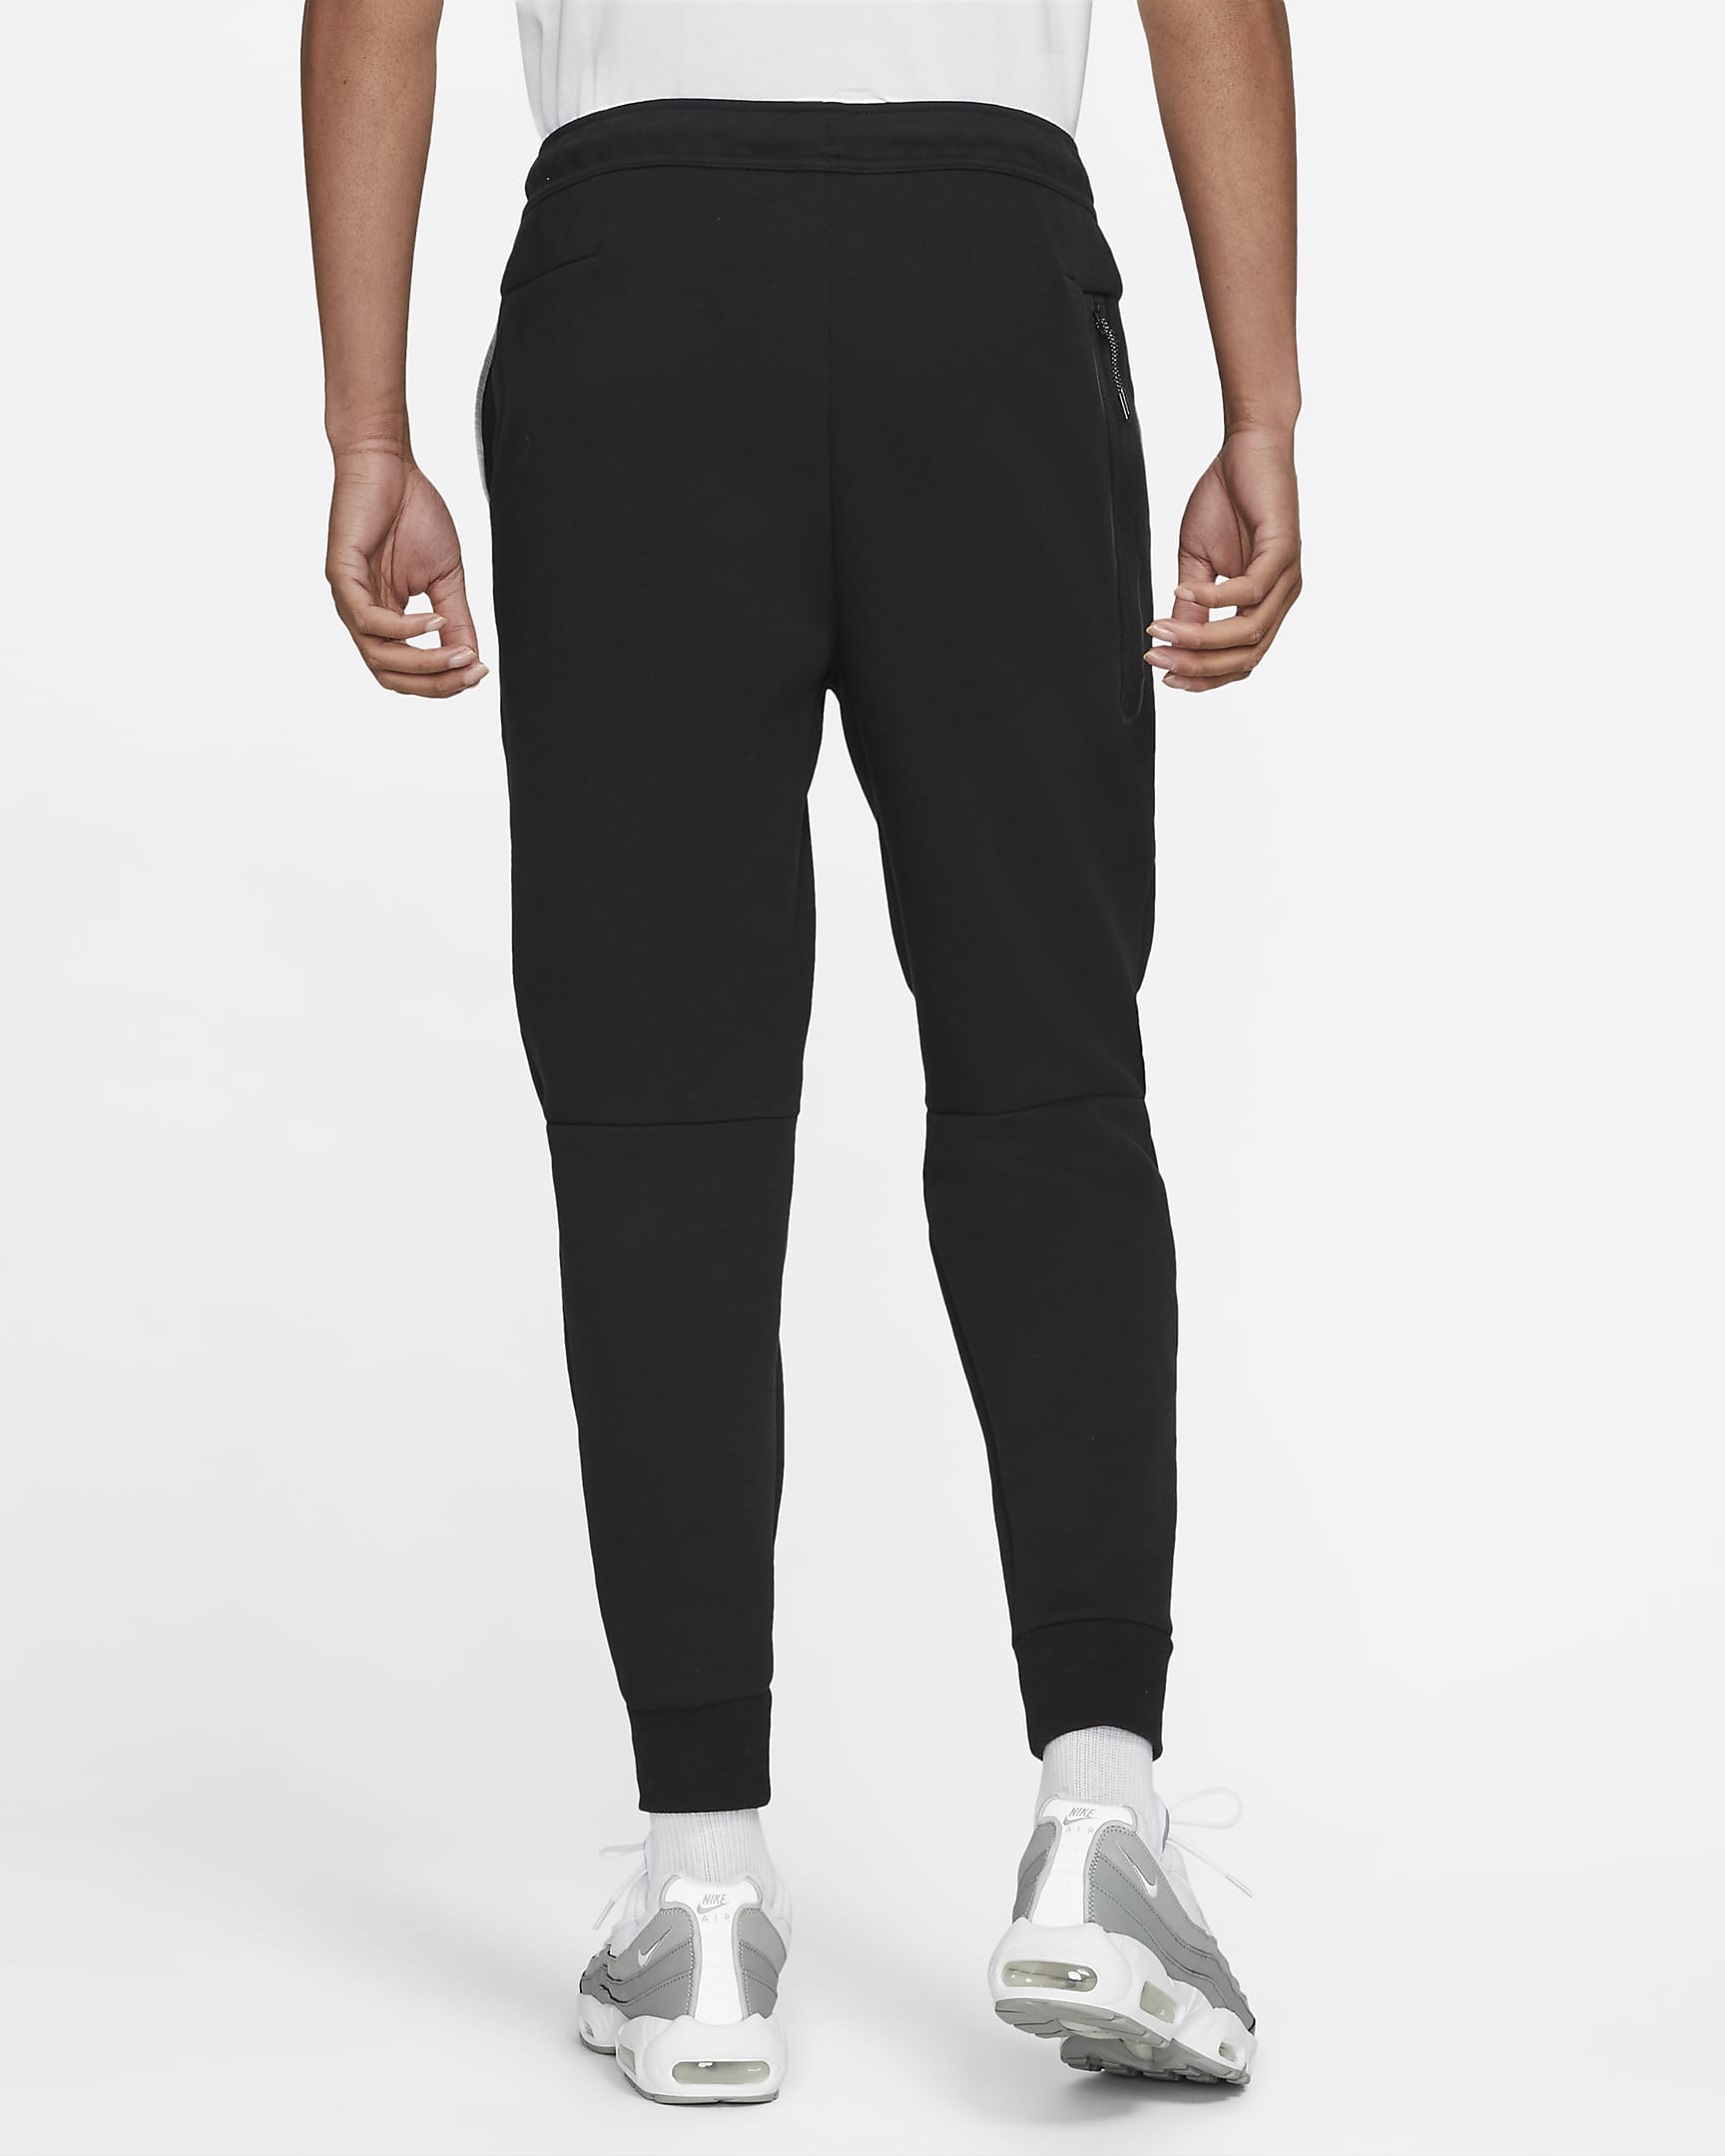 Nike Sportswear Tech Fleece Hoodie and Joggers Available in Black/Dark ...